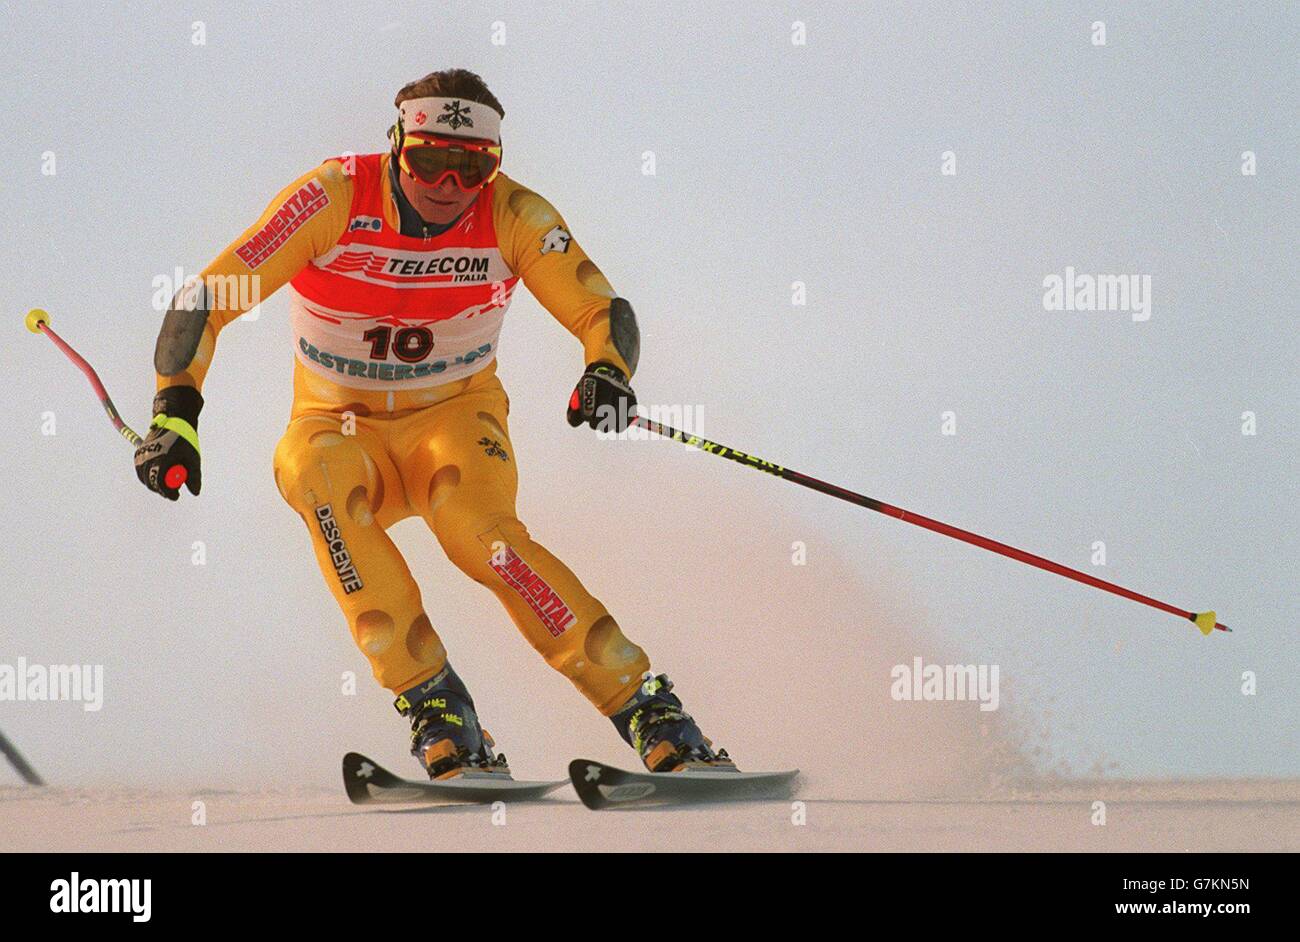 Skiing - Alpine World Ski Championships - 7th Giant Slalom Men - Sestrieres 97. Siegfried Voglreiter Stock Photo